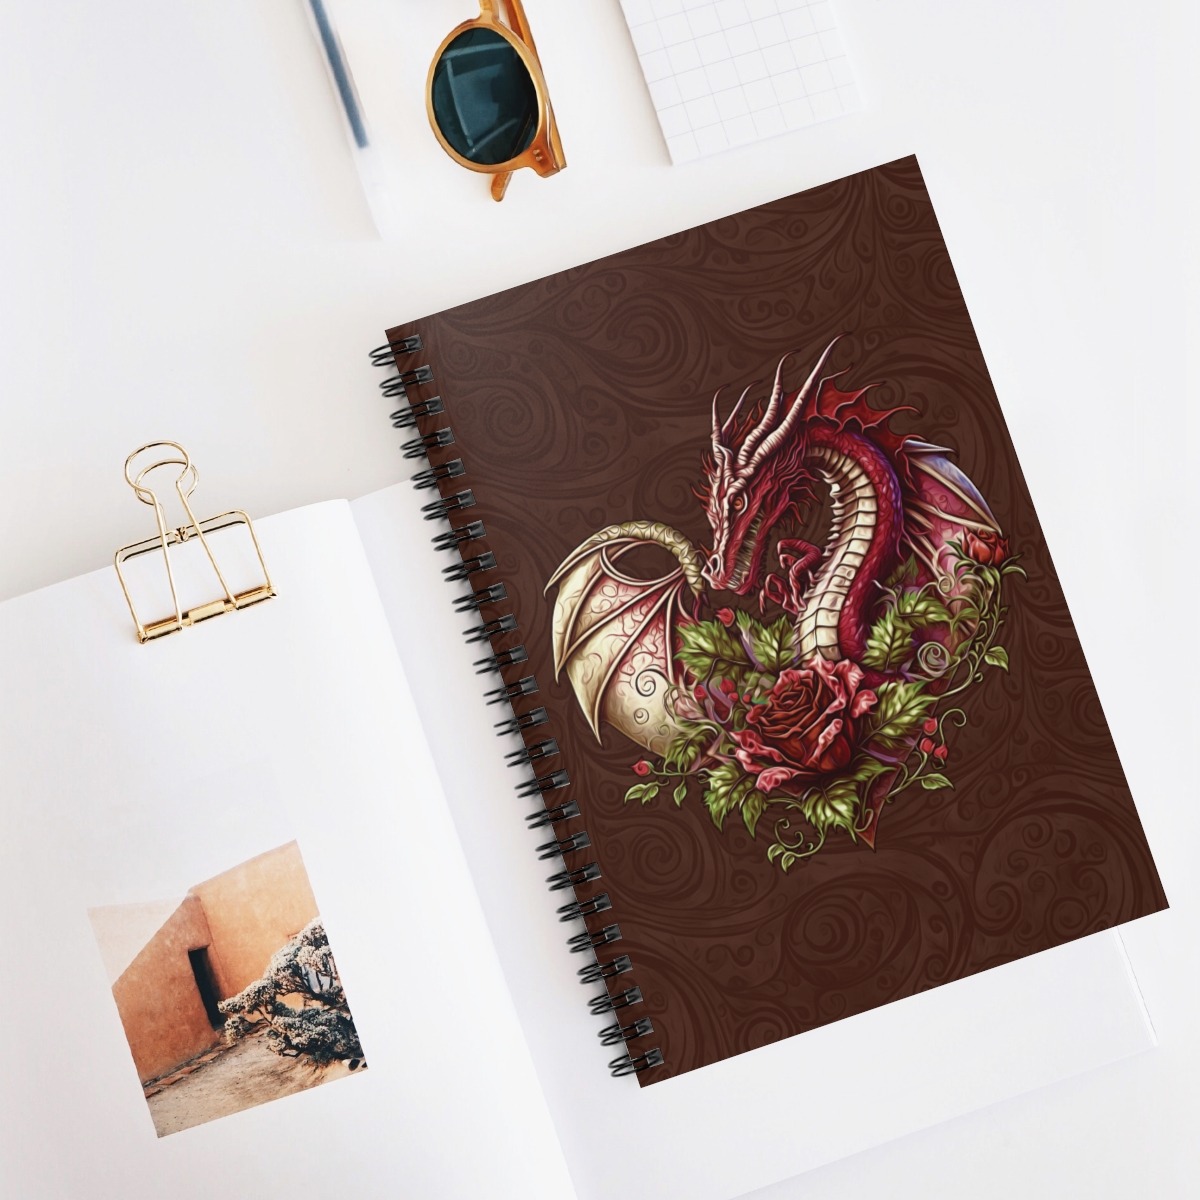 Heart Shaped Dragon Spiral Notebook